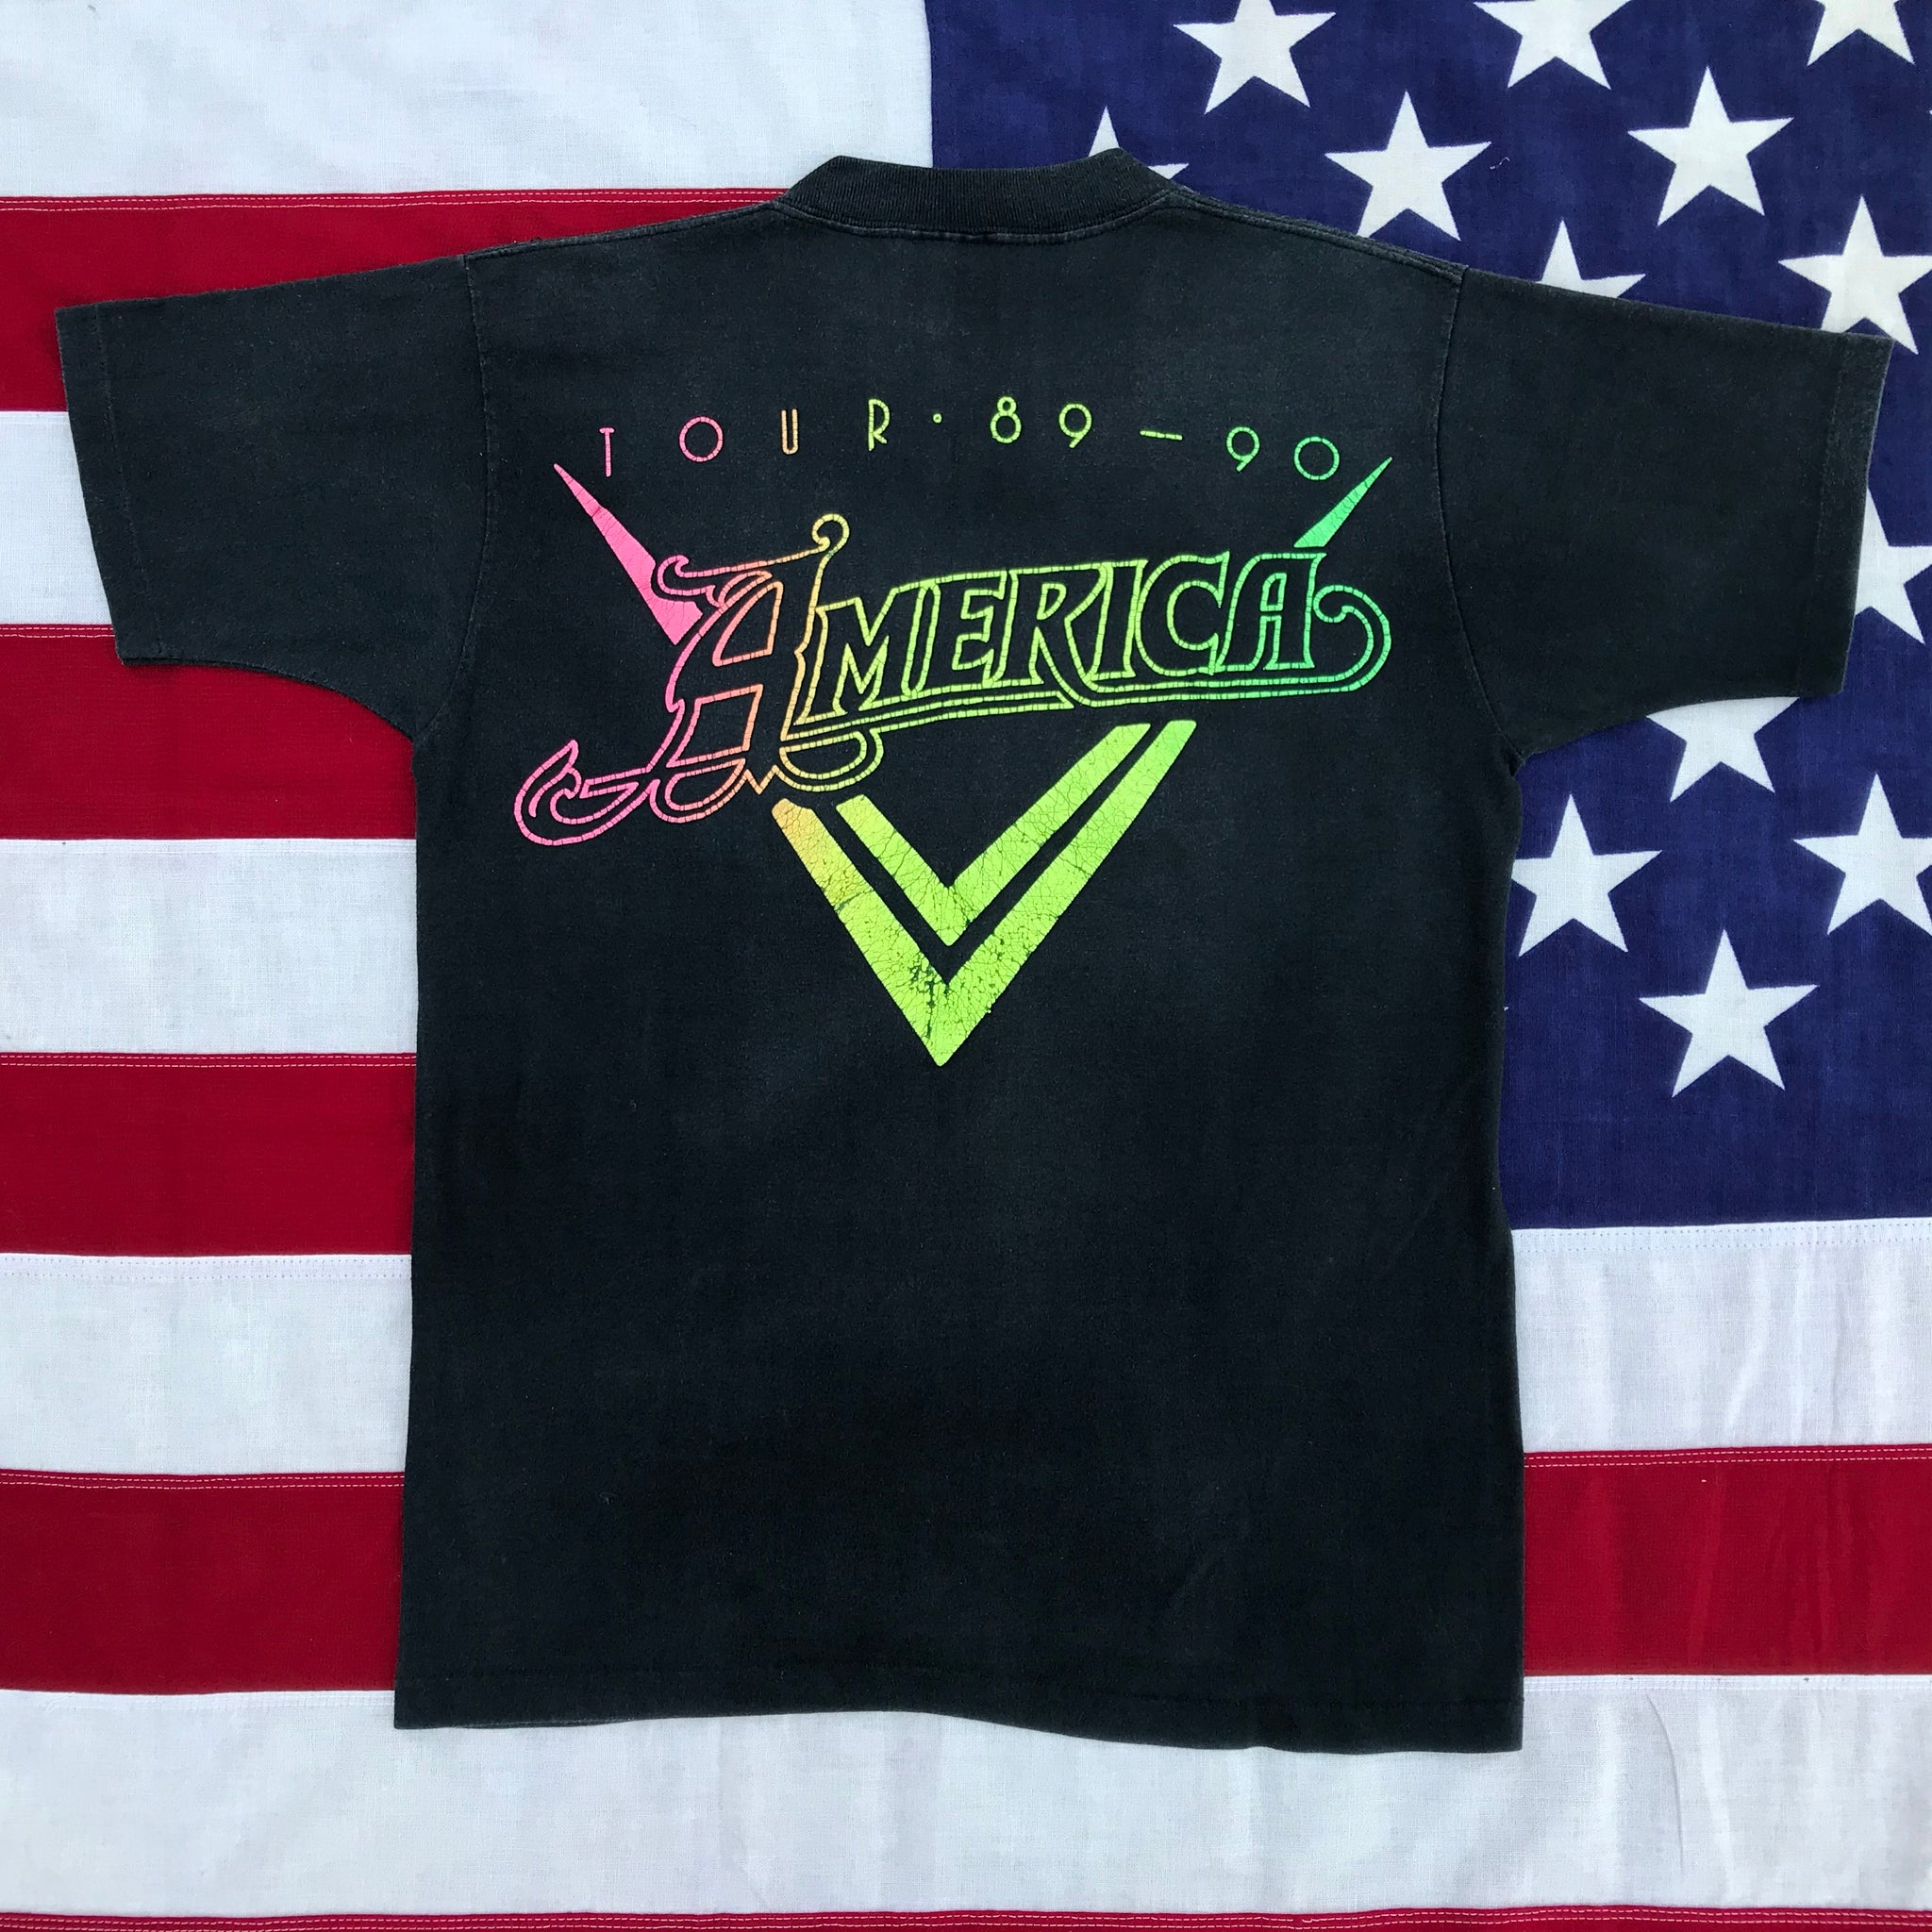 America Tour “ 89 - 90 “ Original Vintage Rock T-Shirt by Skimmers